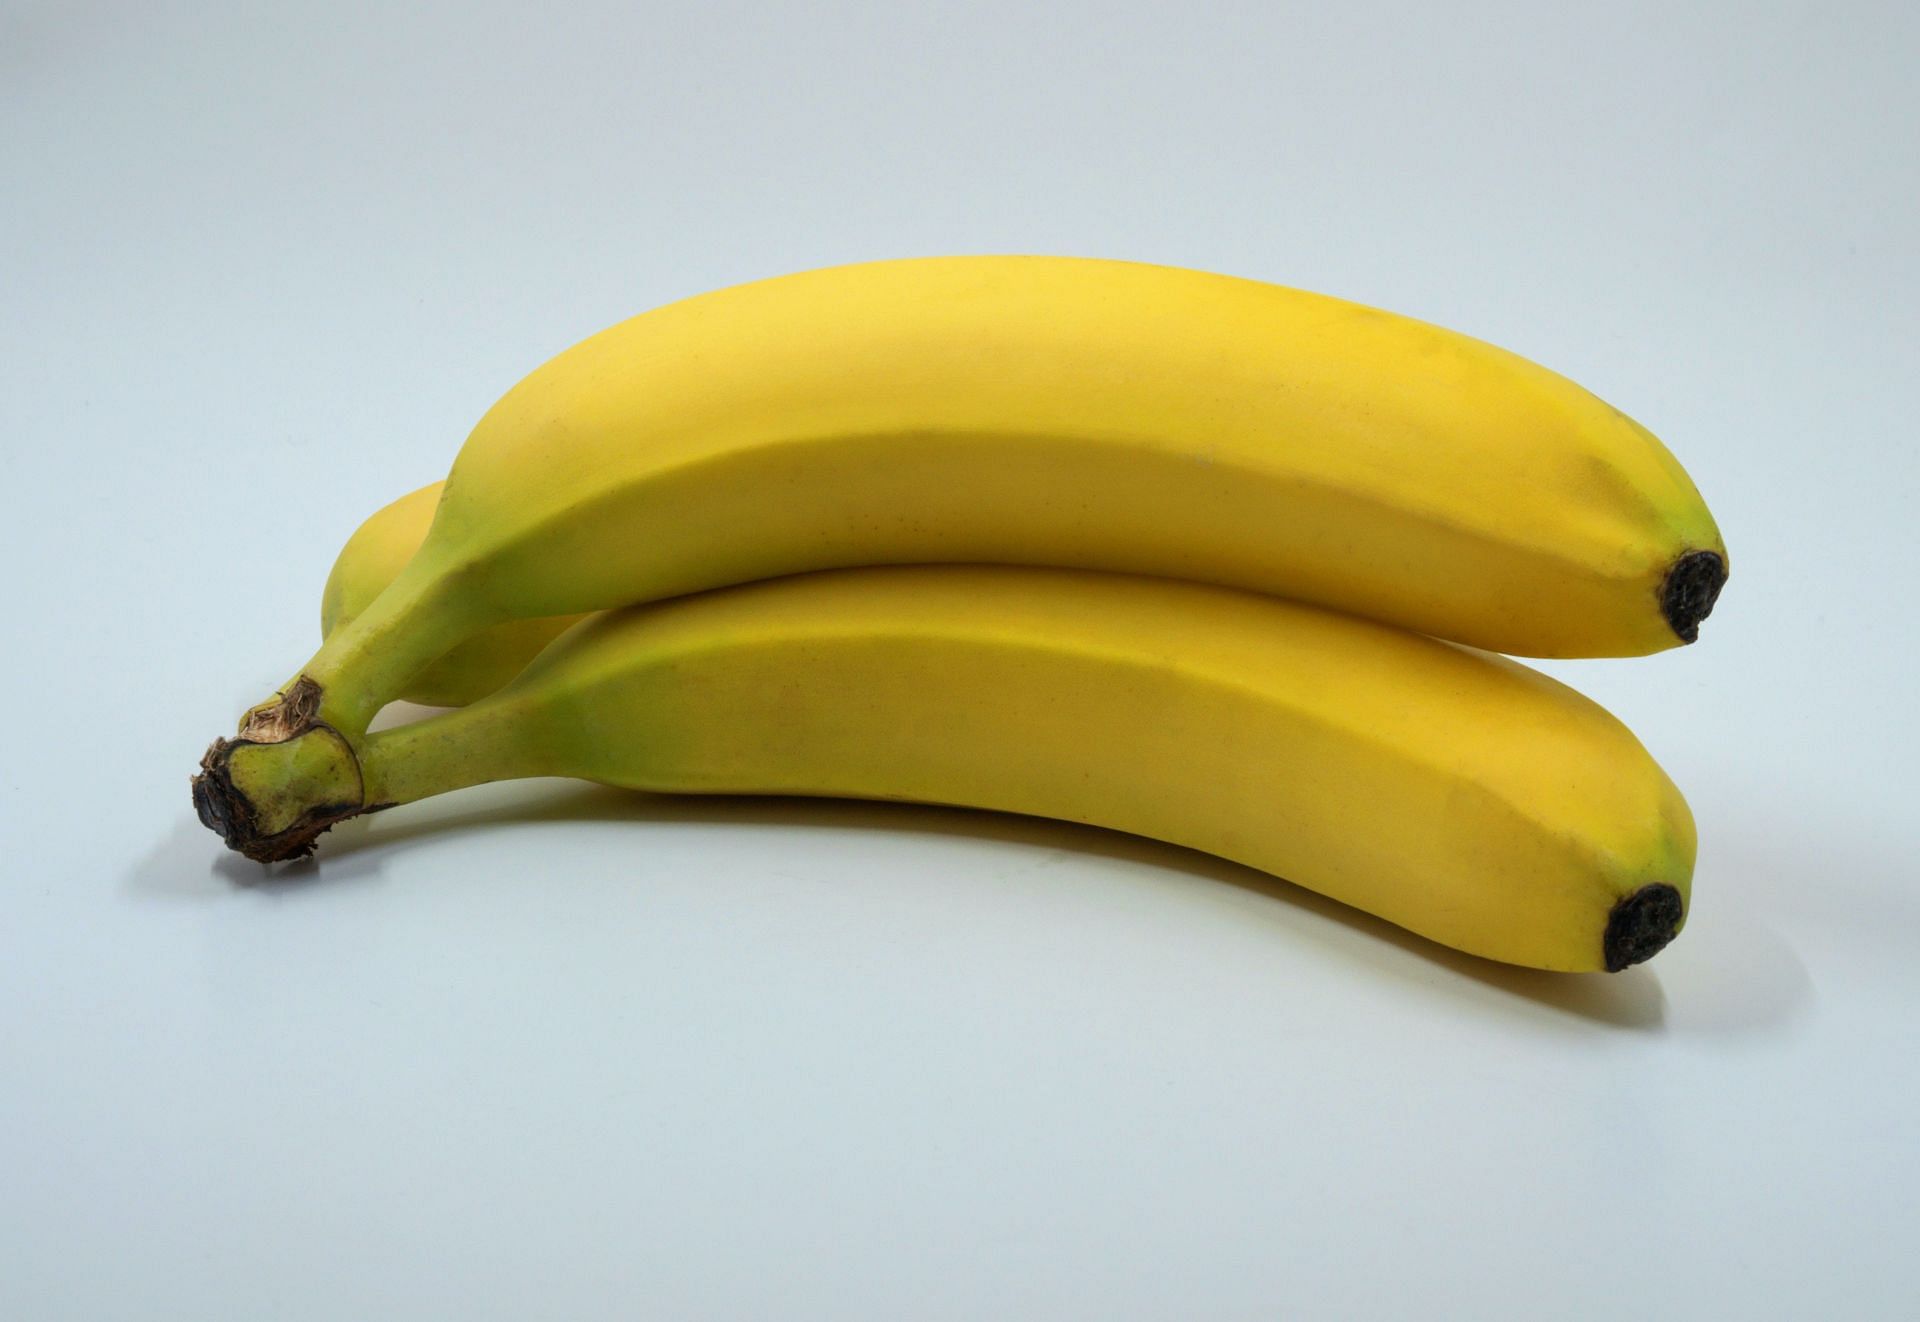 is banana good for constipation? natural remedy for constipation. (Image via unsplash / brett jordan)